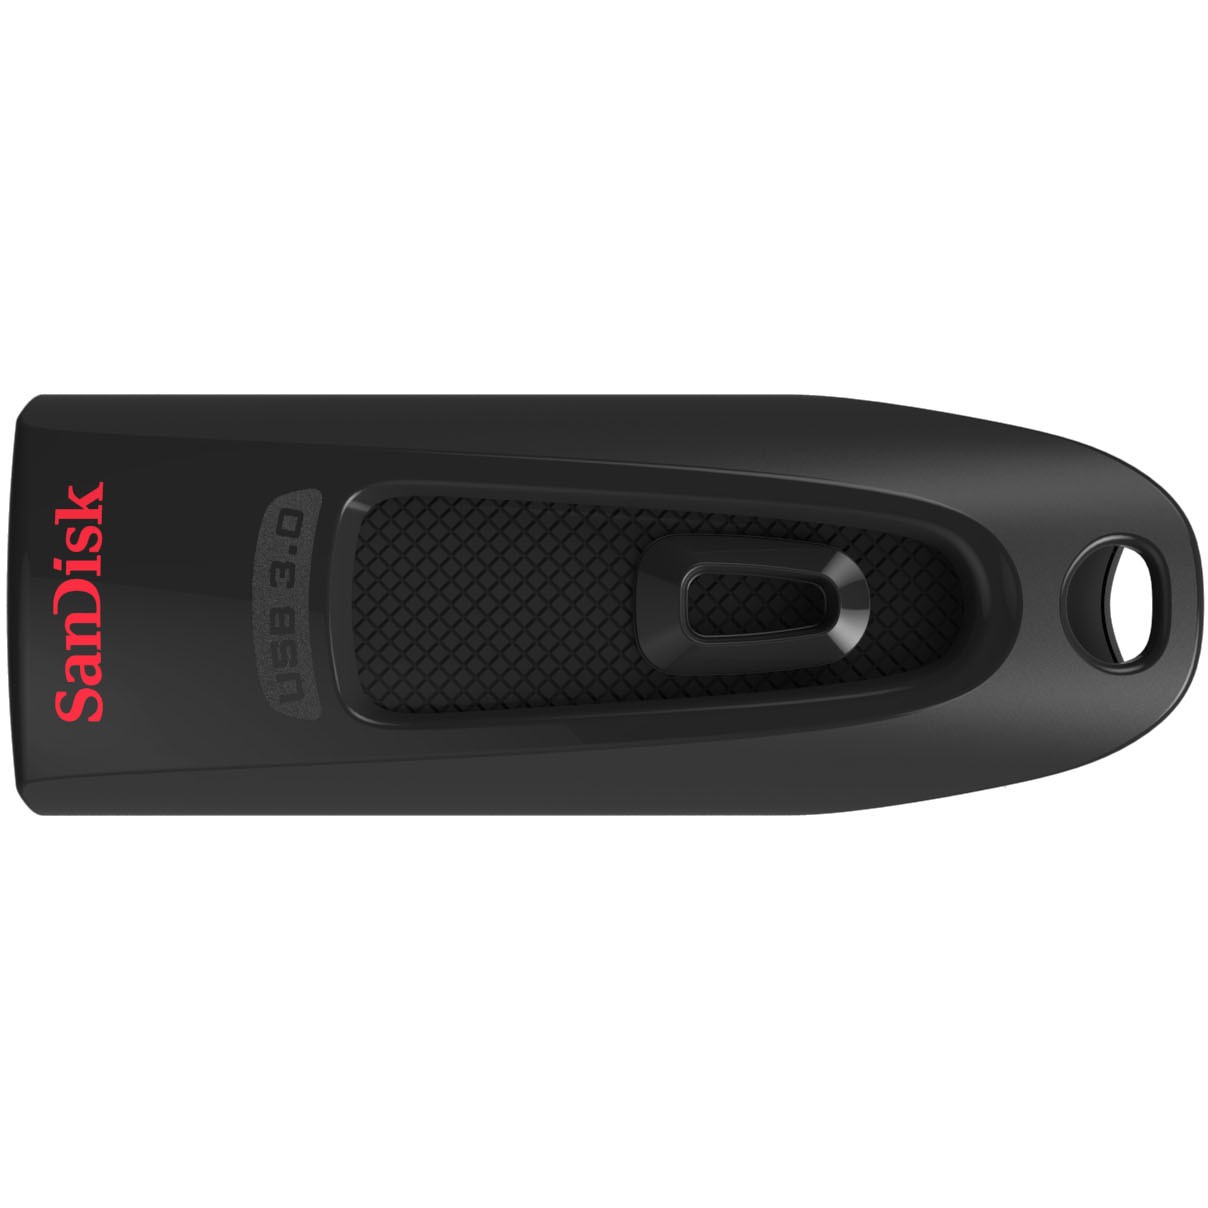 Sandisk SDCZ48-016G-U46, USB-Stick, SanDisk Ultra USB  (BILD6)